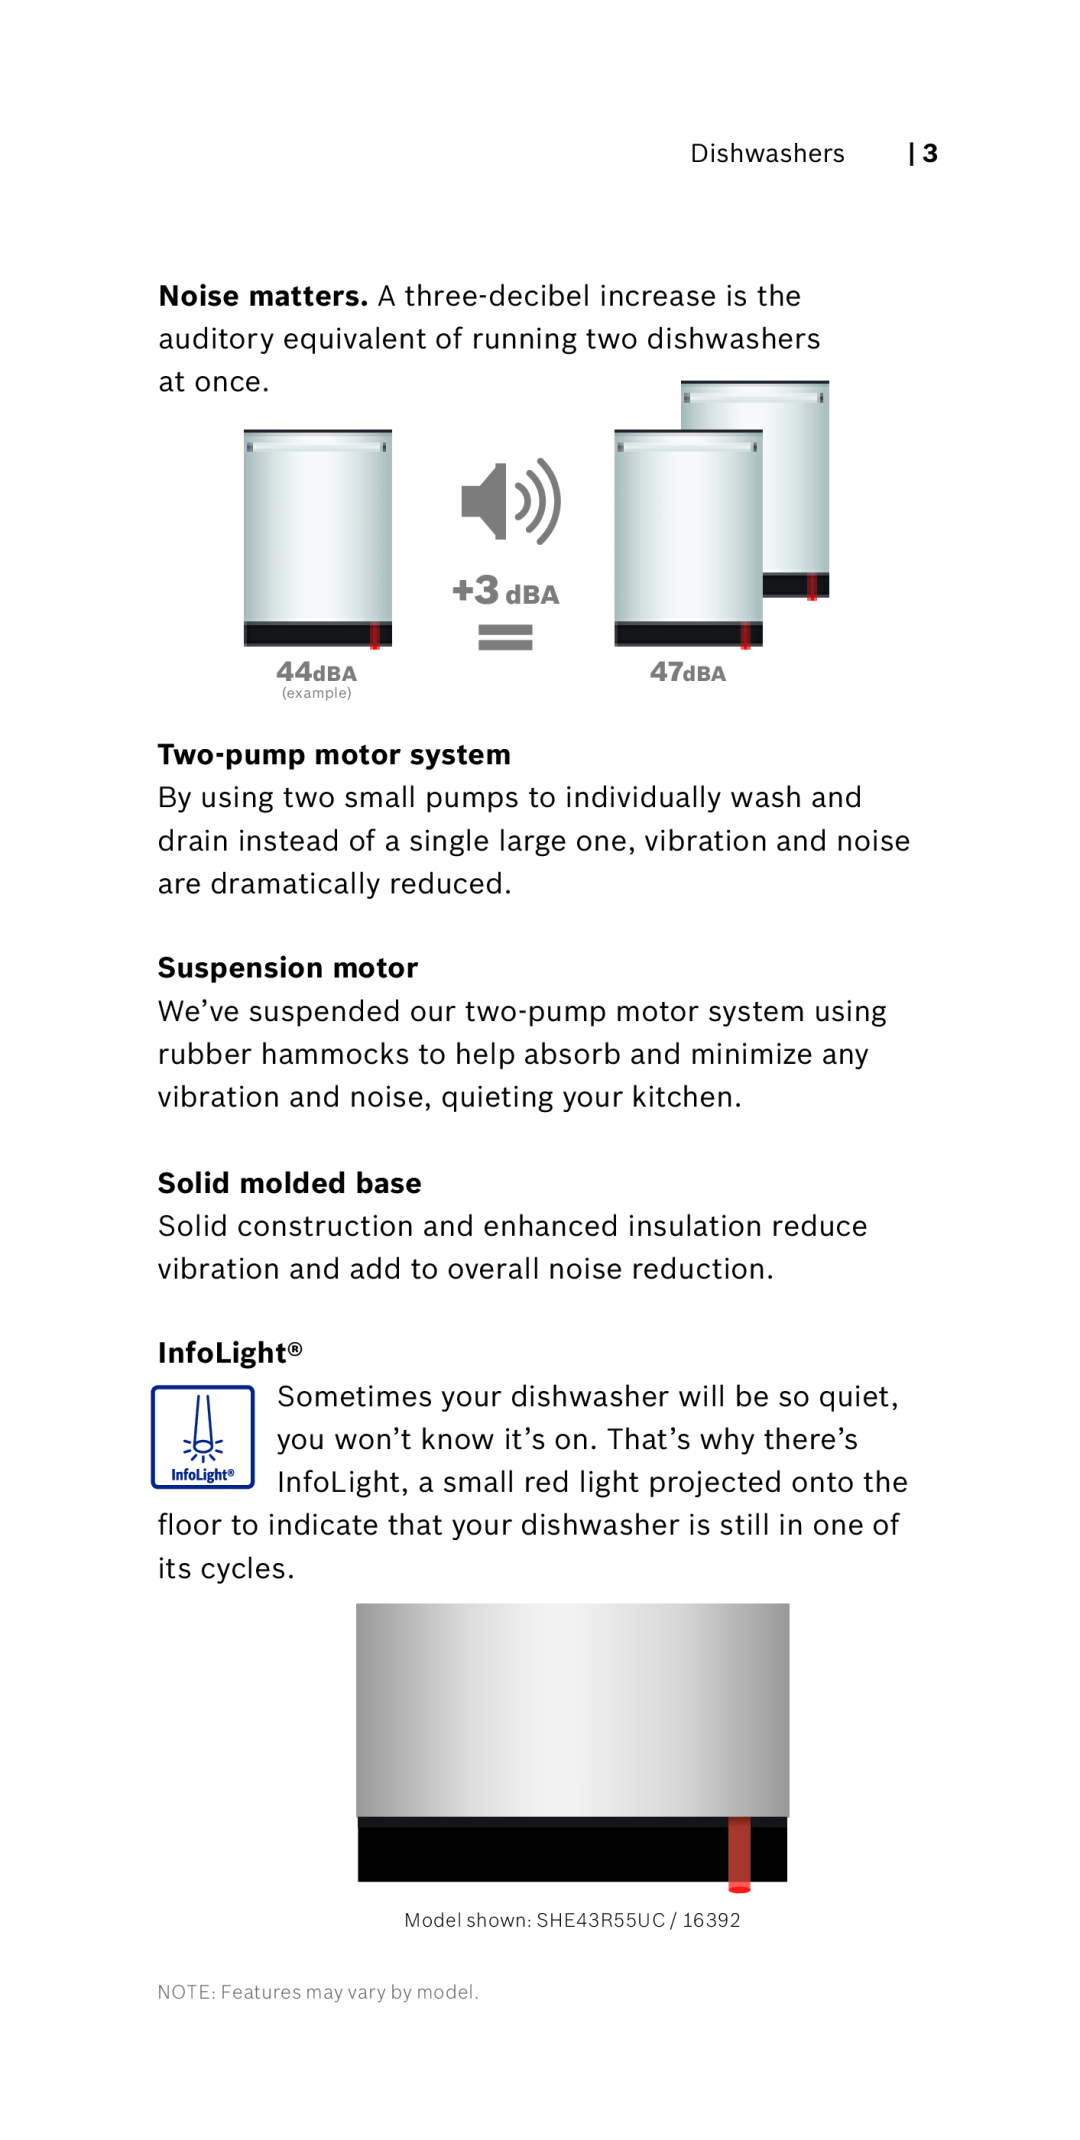 Bosch Appliances 800 Series manual +3 dBA, Two-pump motor system, Suspension motor, Solid molded base, infolight 